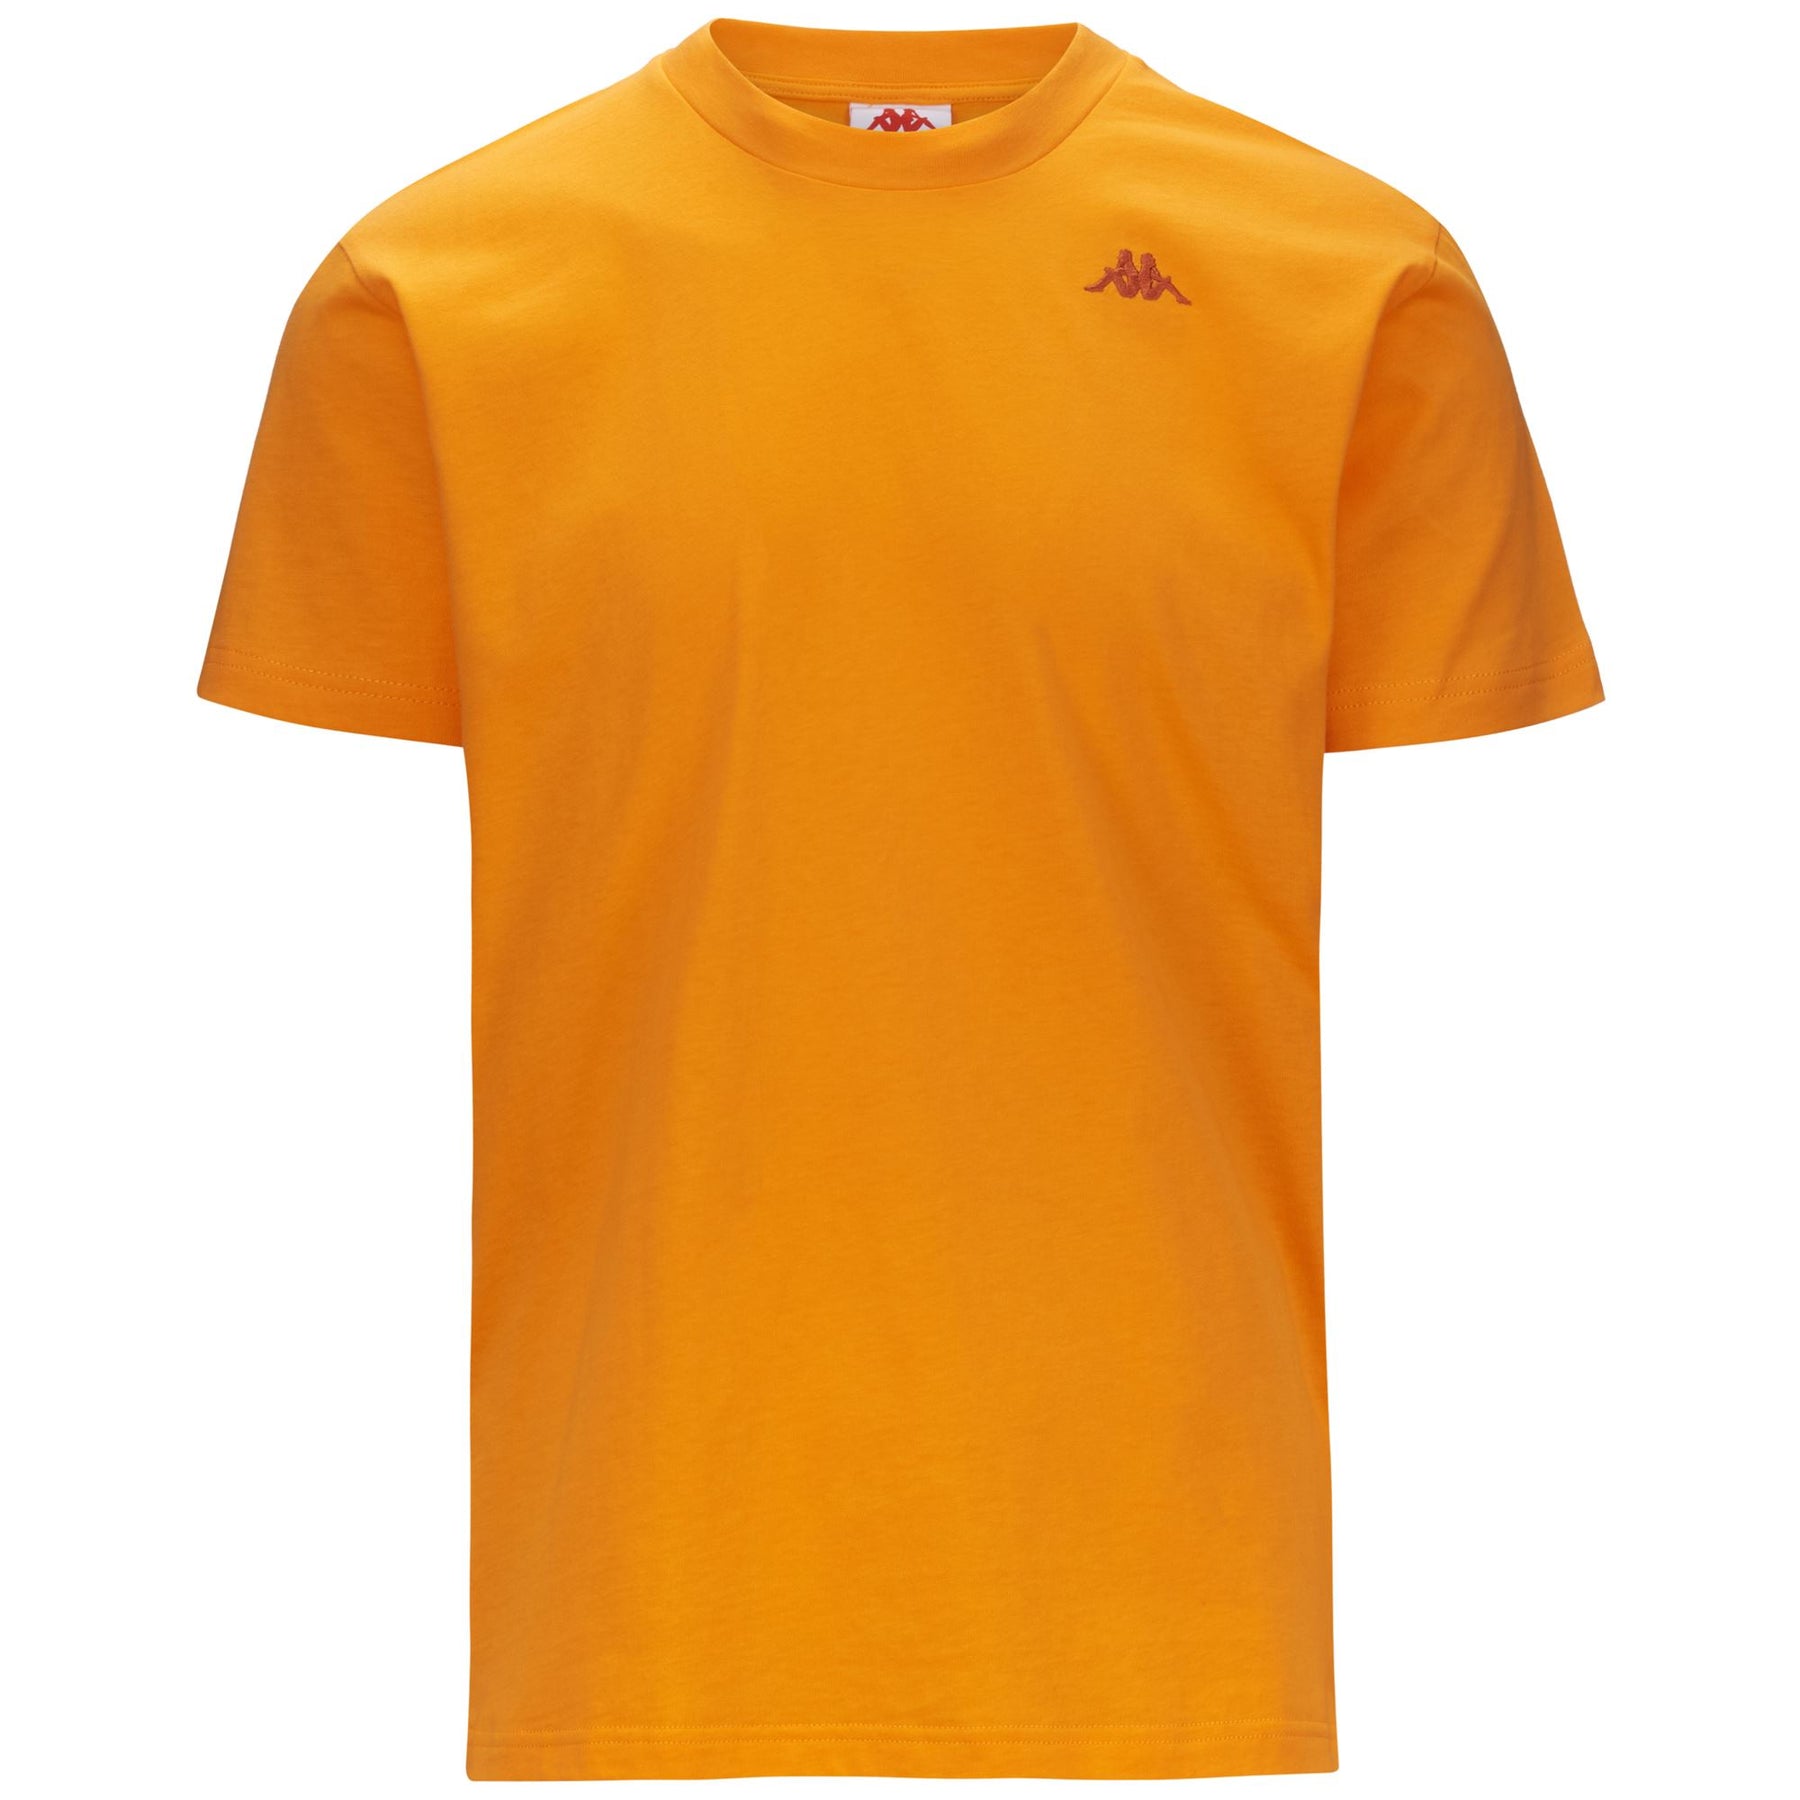 222 BANDA GASPER - T-ShirtsTop - T-Shirt - Man - ORANGE-ORANGE APRICOT